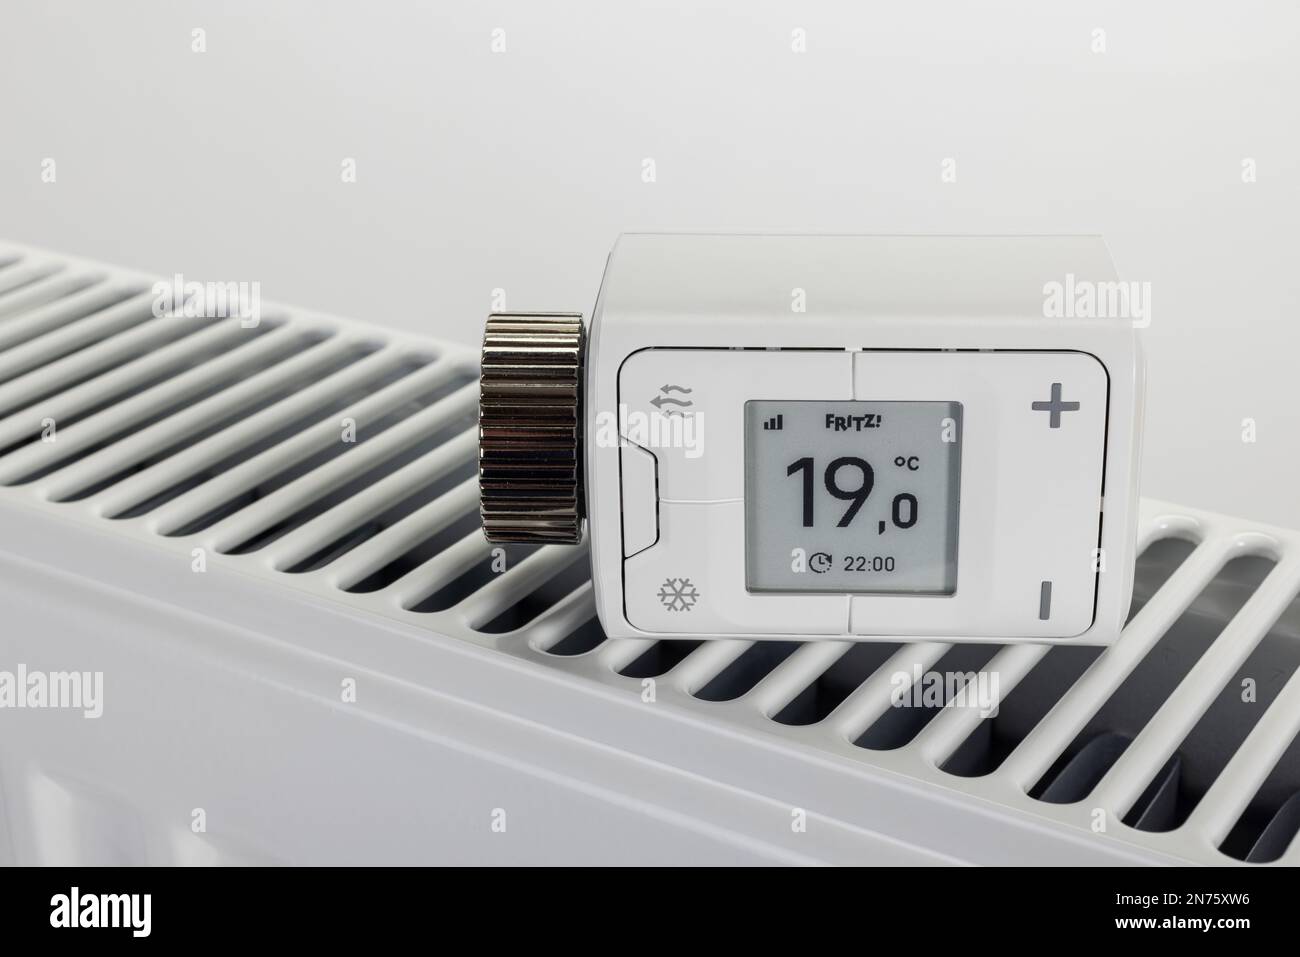 WLAN radiator thermostat FRITZ! DECT 302, display shows 2ö°C